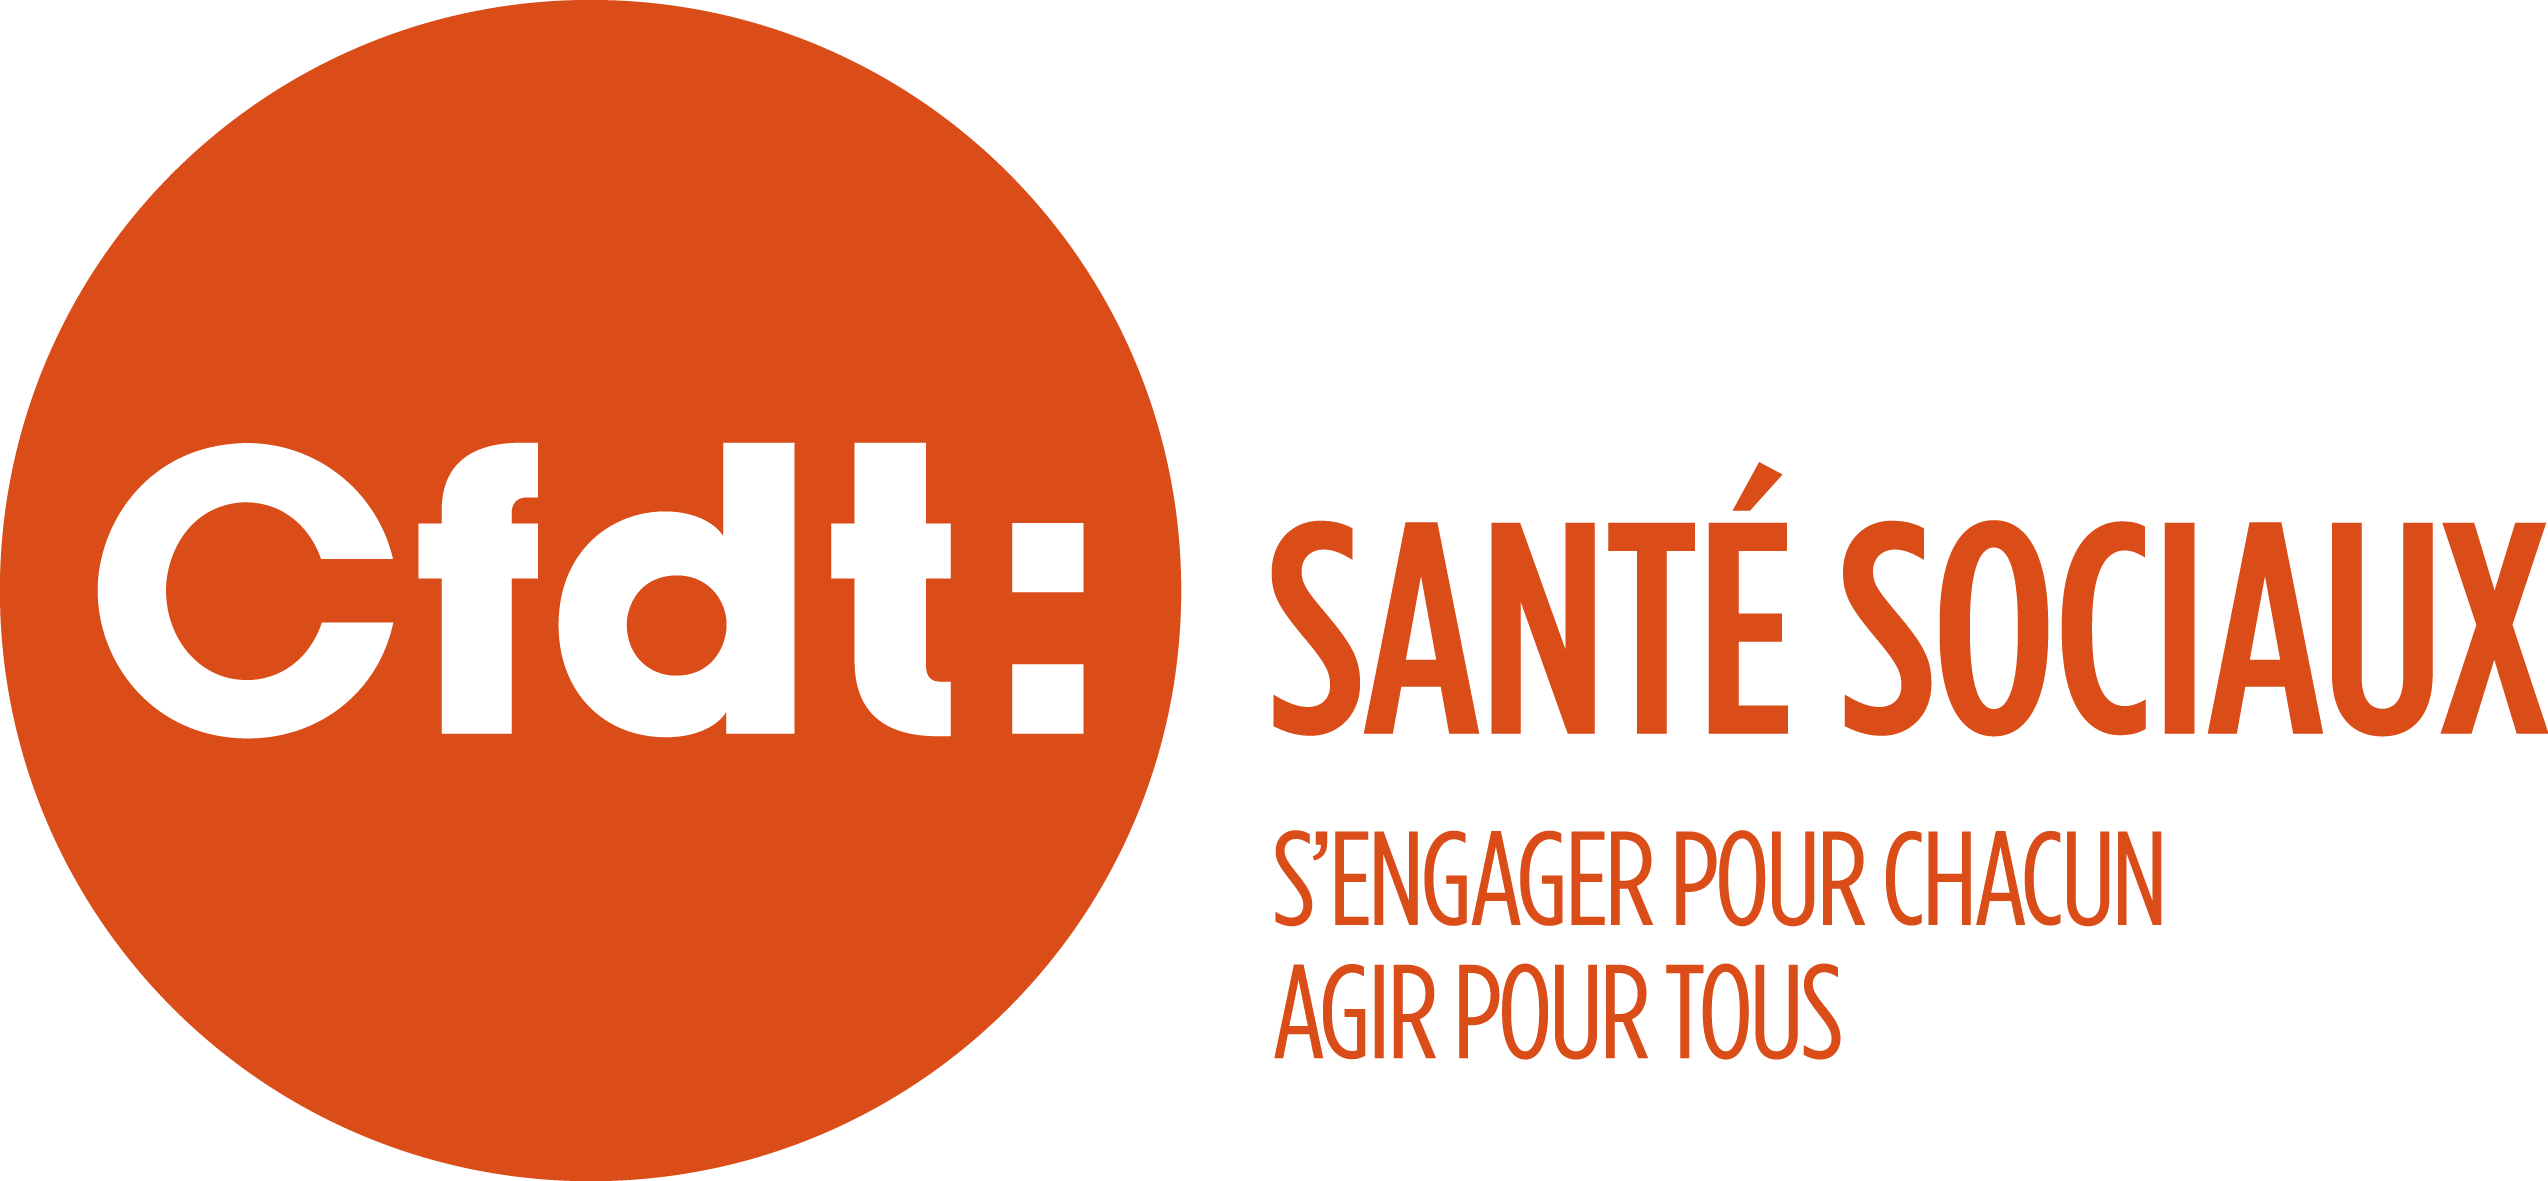 Logo CFDT Santé-sociaux